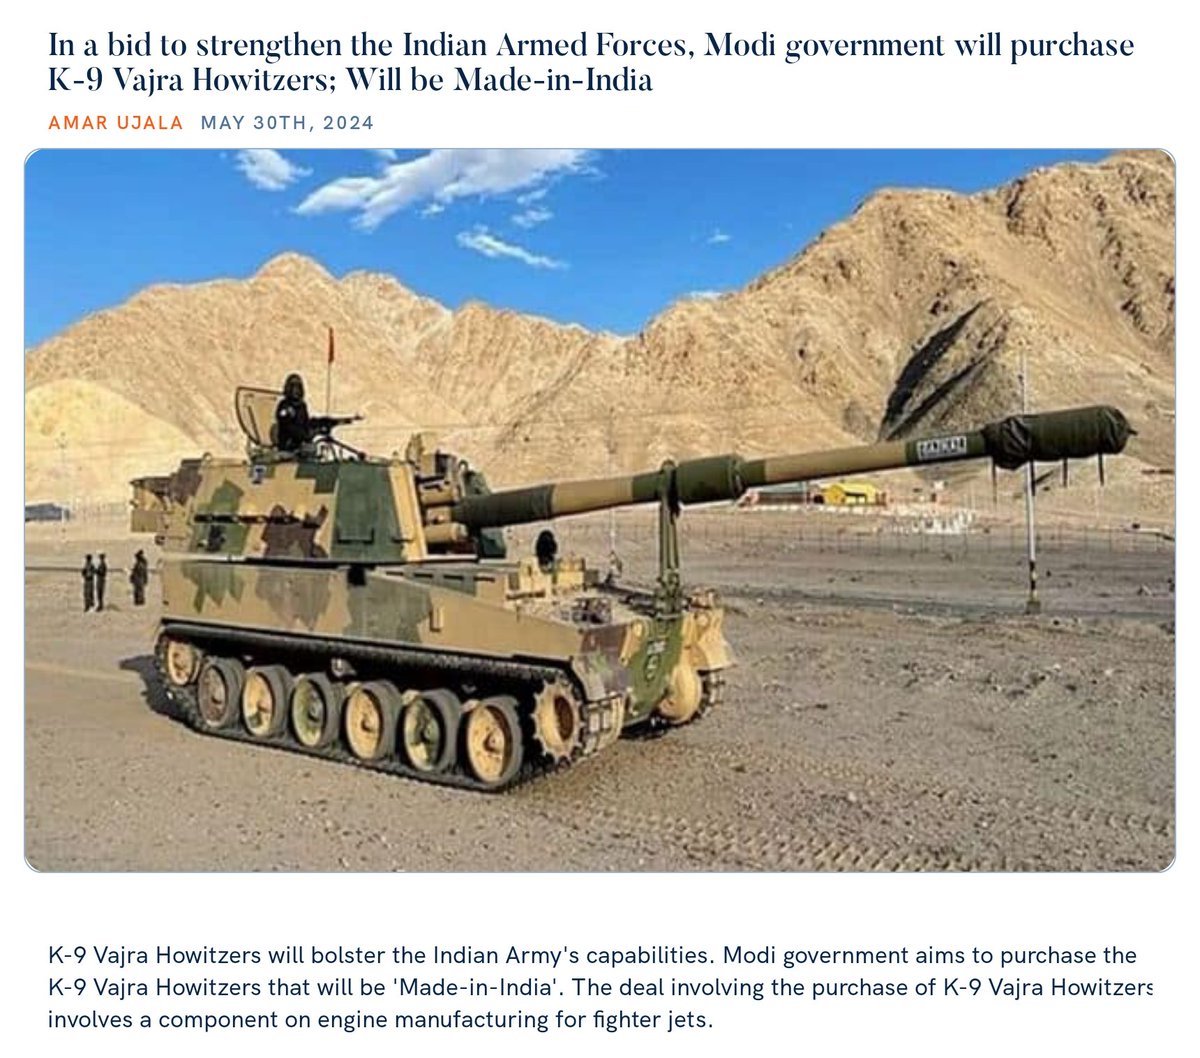 In a bid to strengthen the Indian Armed Forces, Modi government will purchase K-9 Vajra Howitzers; Will be Made-in-India 
amarujala.com/india-news/maj… via NaMo App
#SankalpitKashi
#PhirEkBaarModiSarkar 
#AbkiBaar400Paar 
#ModiKiGuarantee 
काशी बनारस वाराणसी Kashi Banaras Varanasi